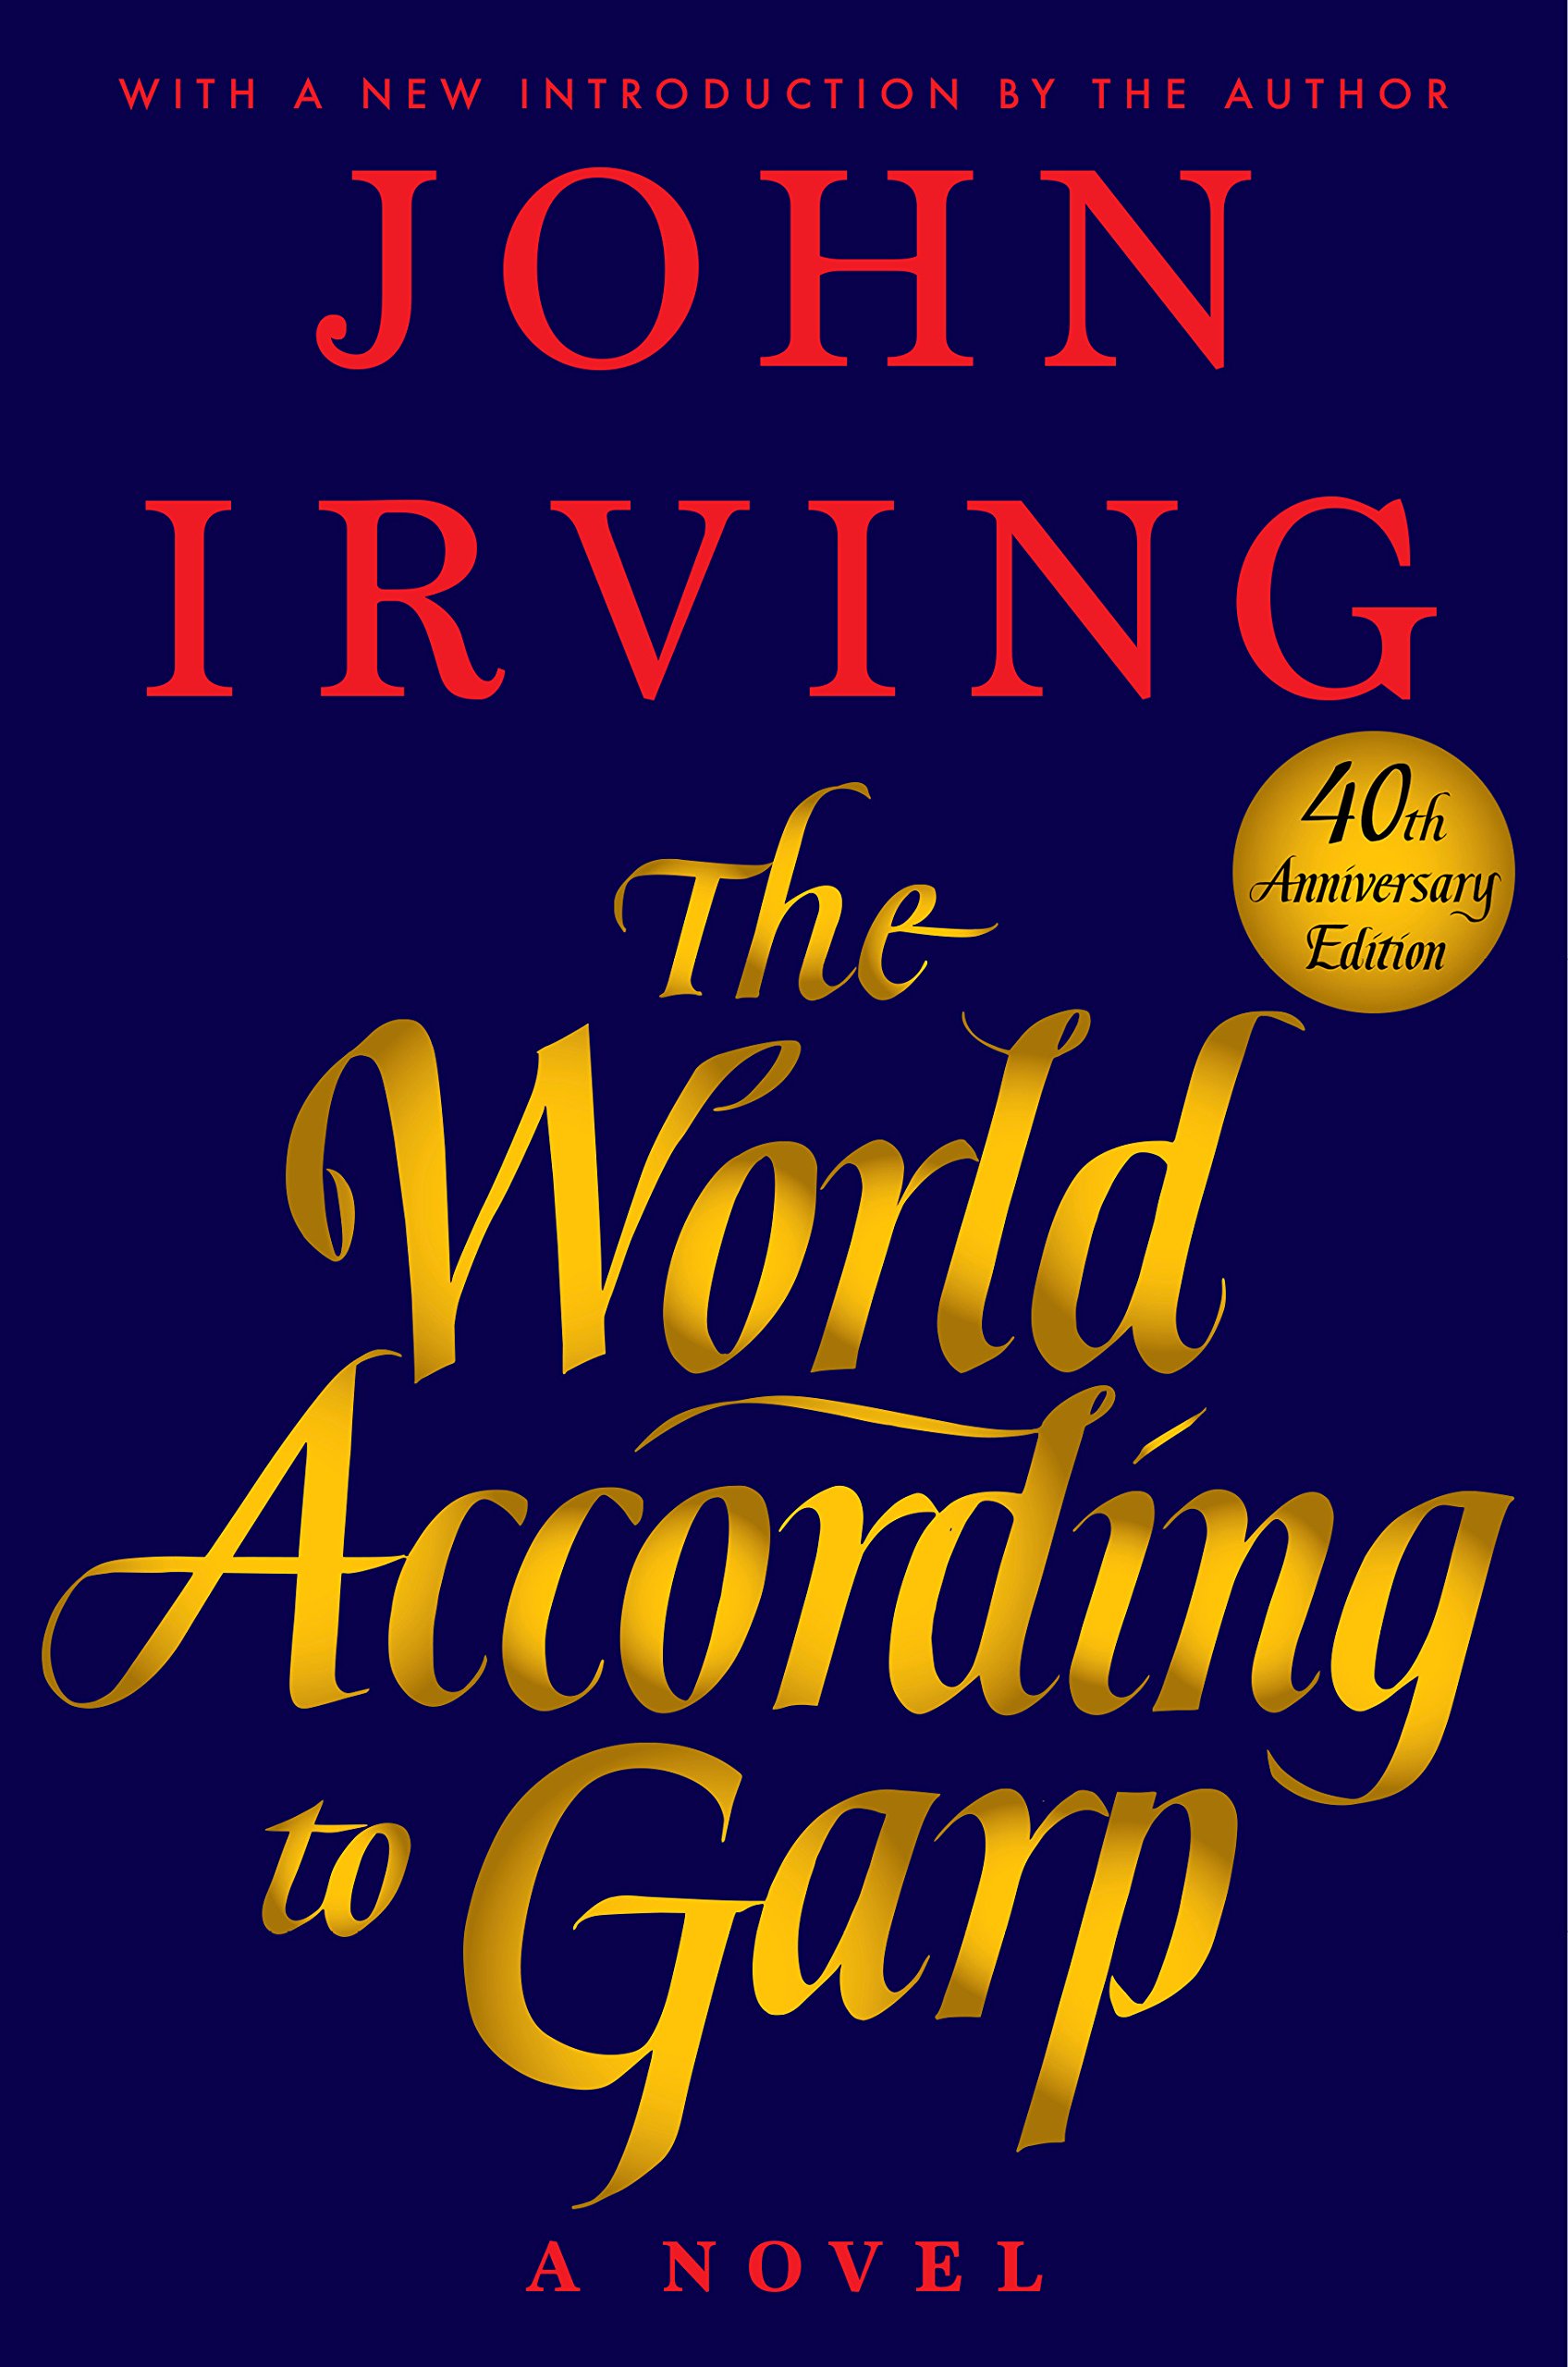 The World According to Garp: A Novel (eBook) by John Irving $1.99